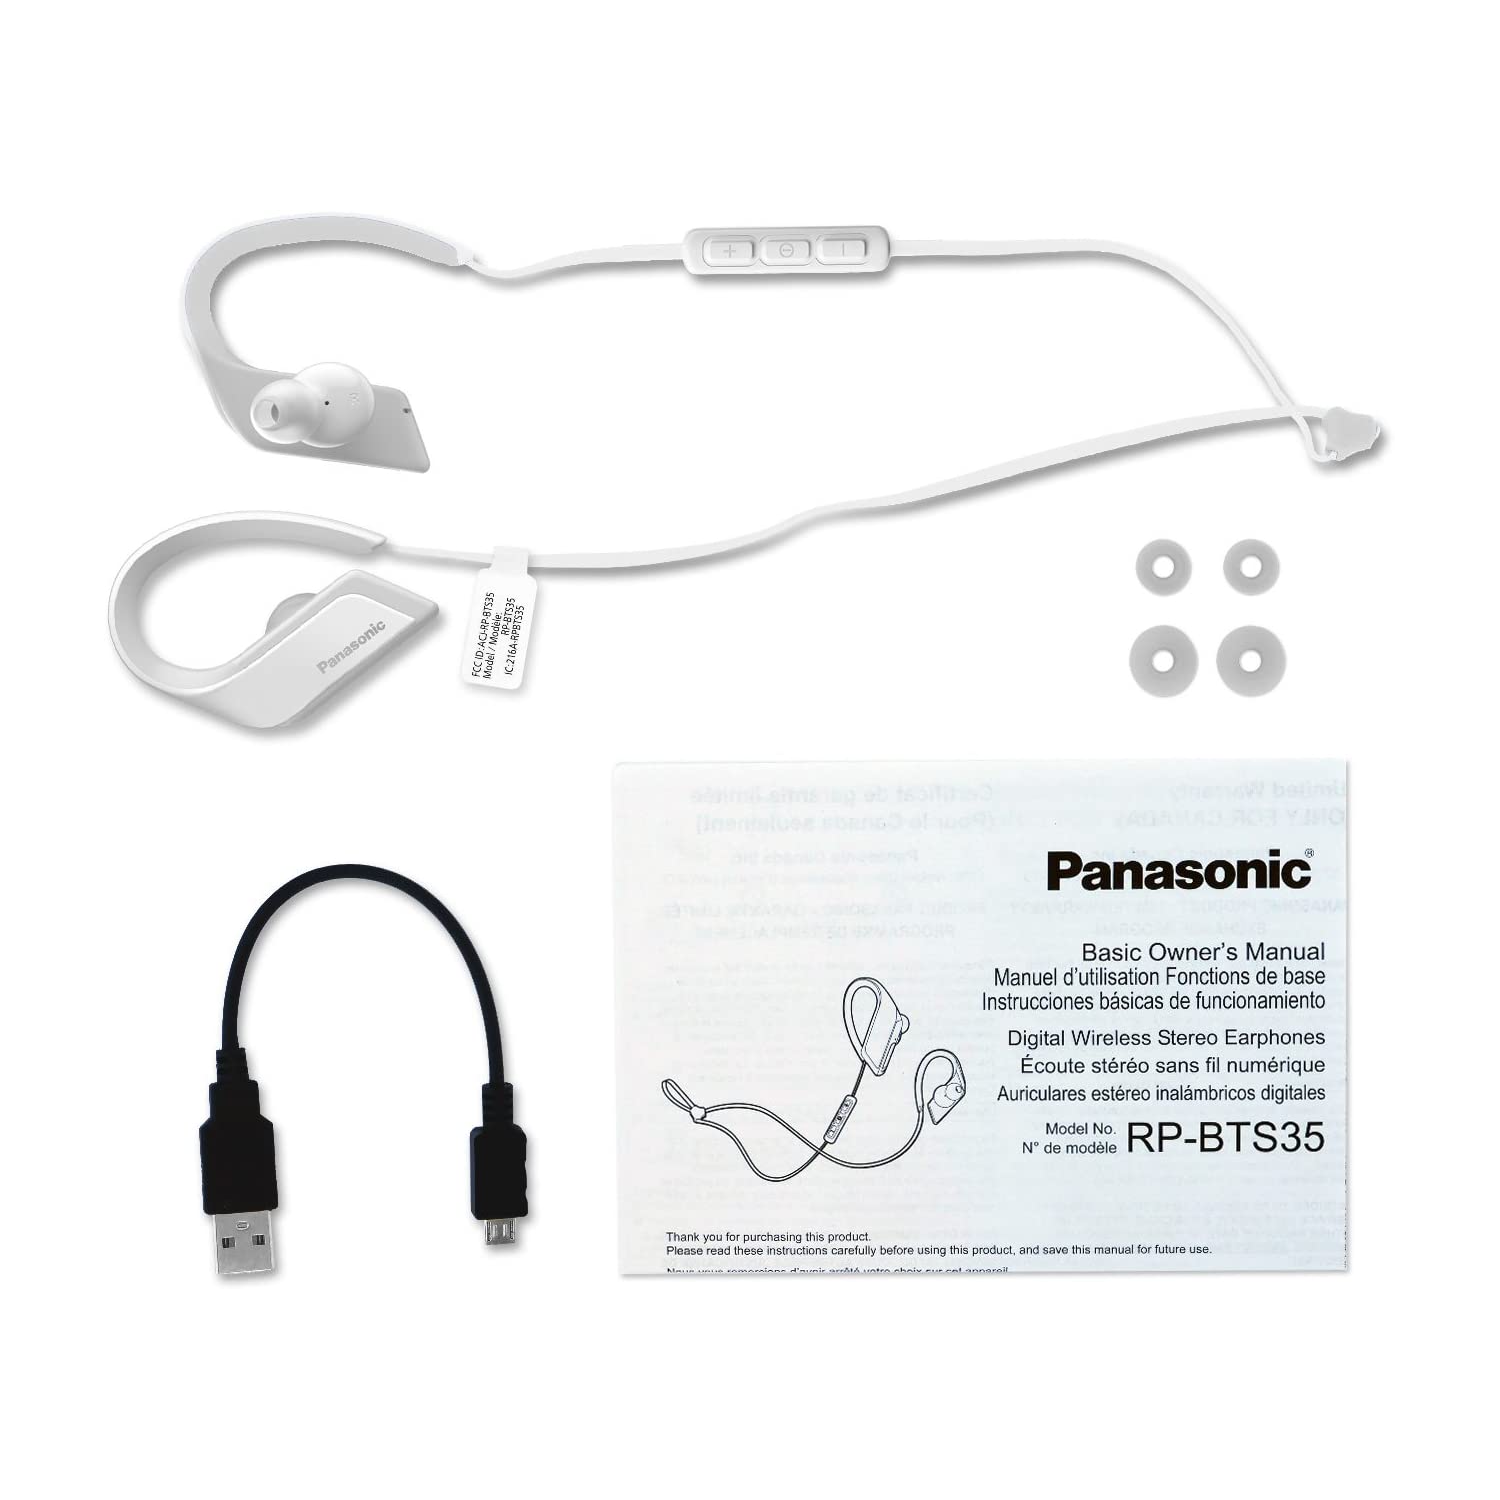 Panasonic WINGS Ultra-Light Wireless Bluetooth Sport Earphones - White